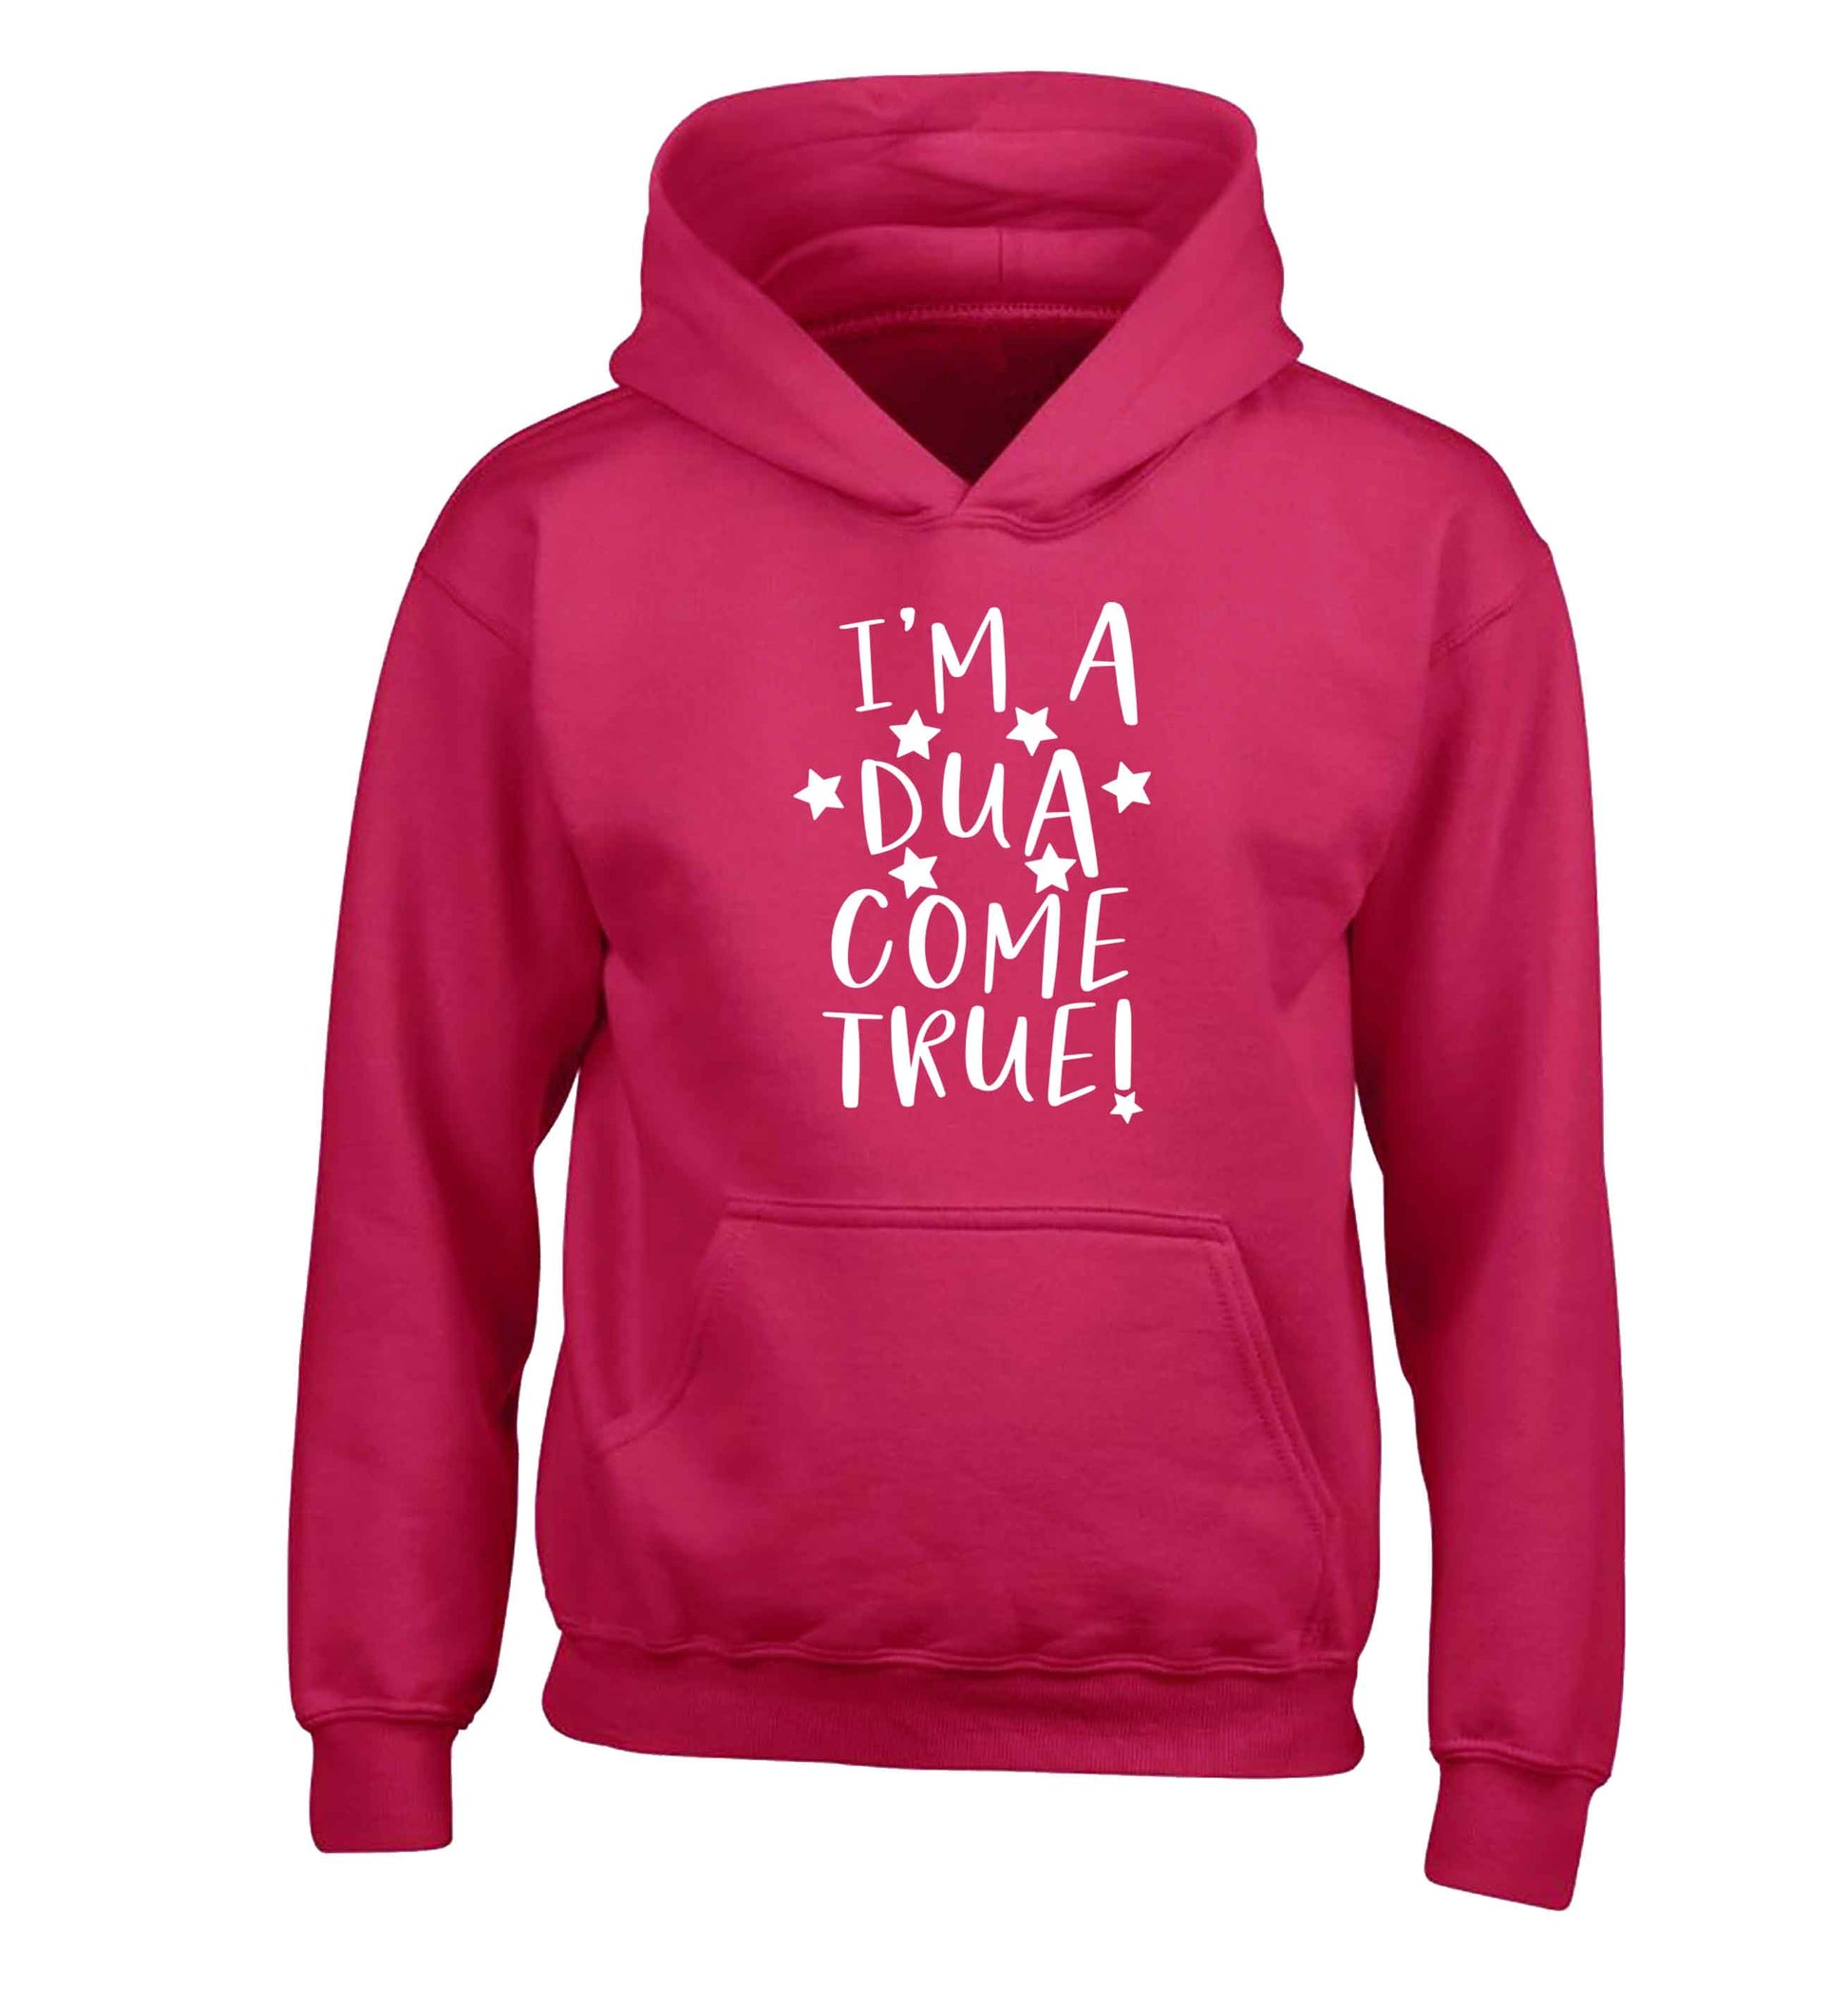 I'm a dua come true children's pink hoodie 12-13 Years